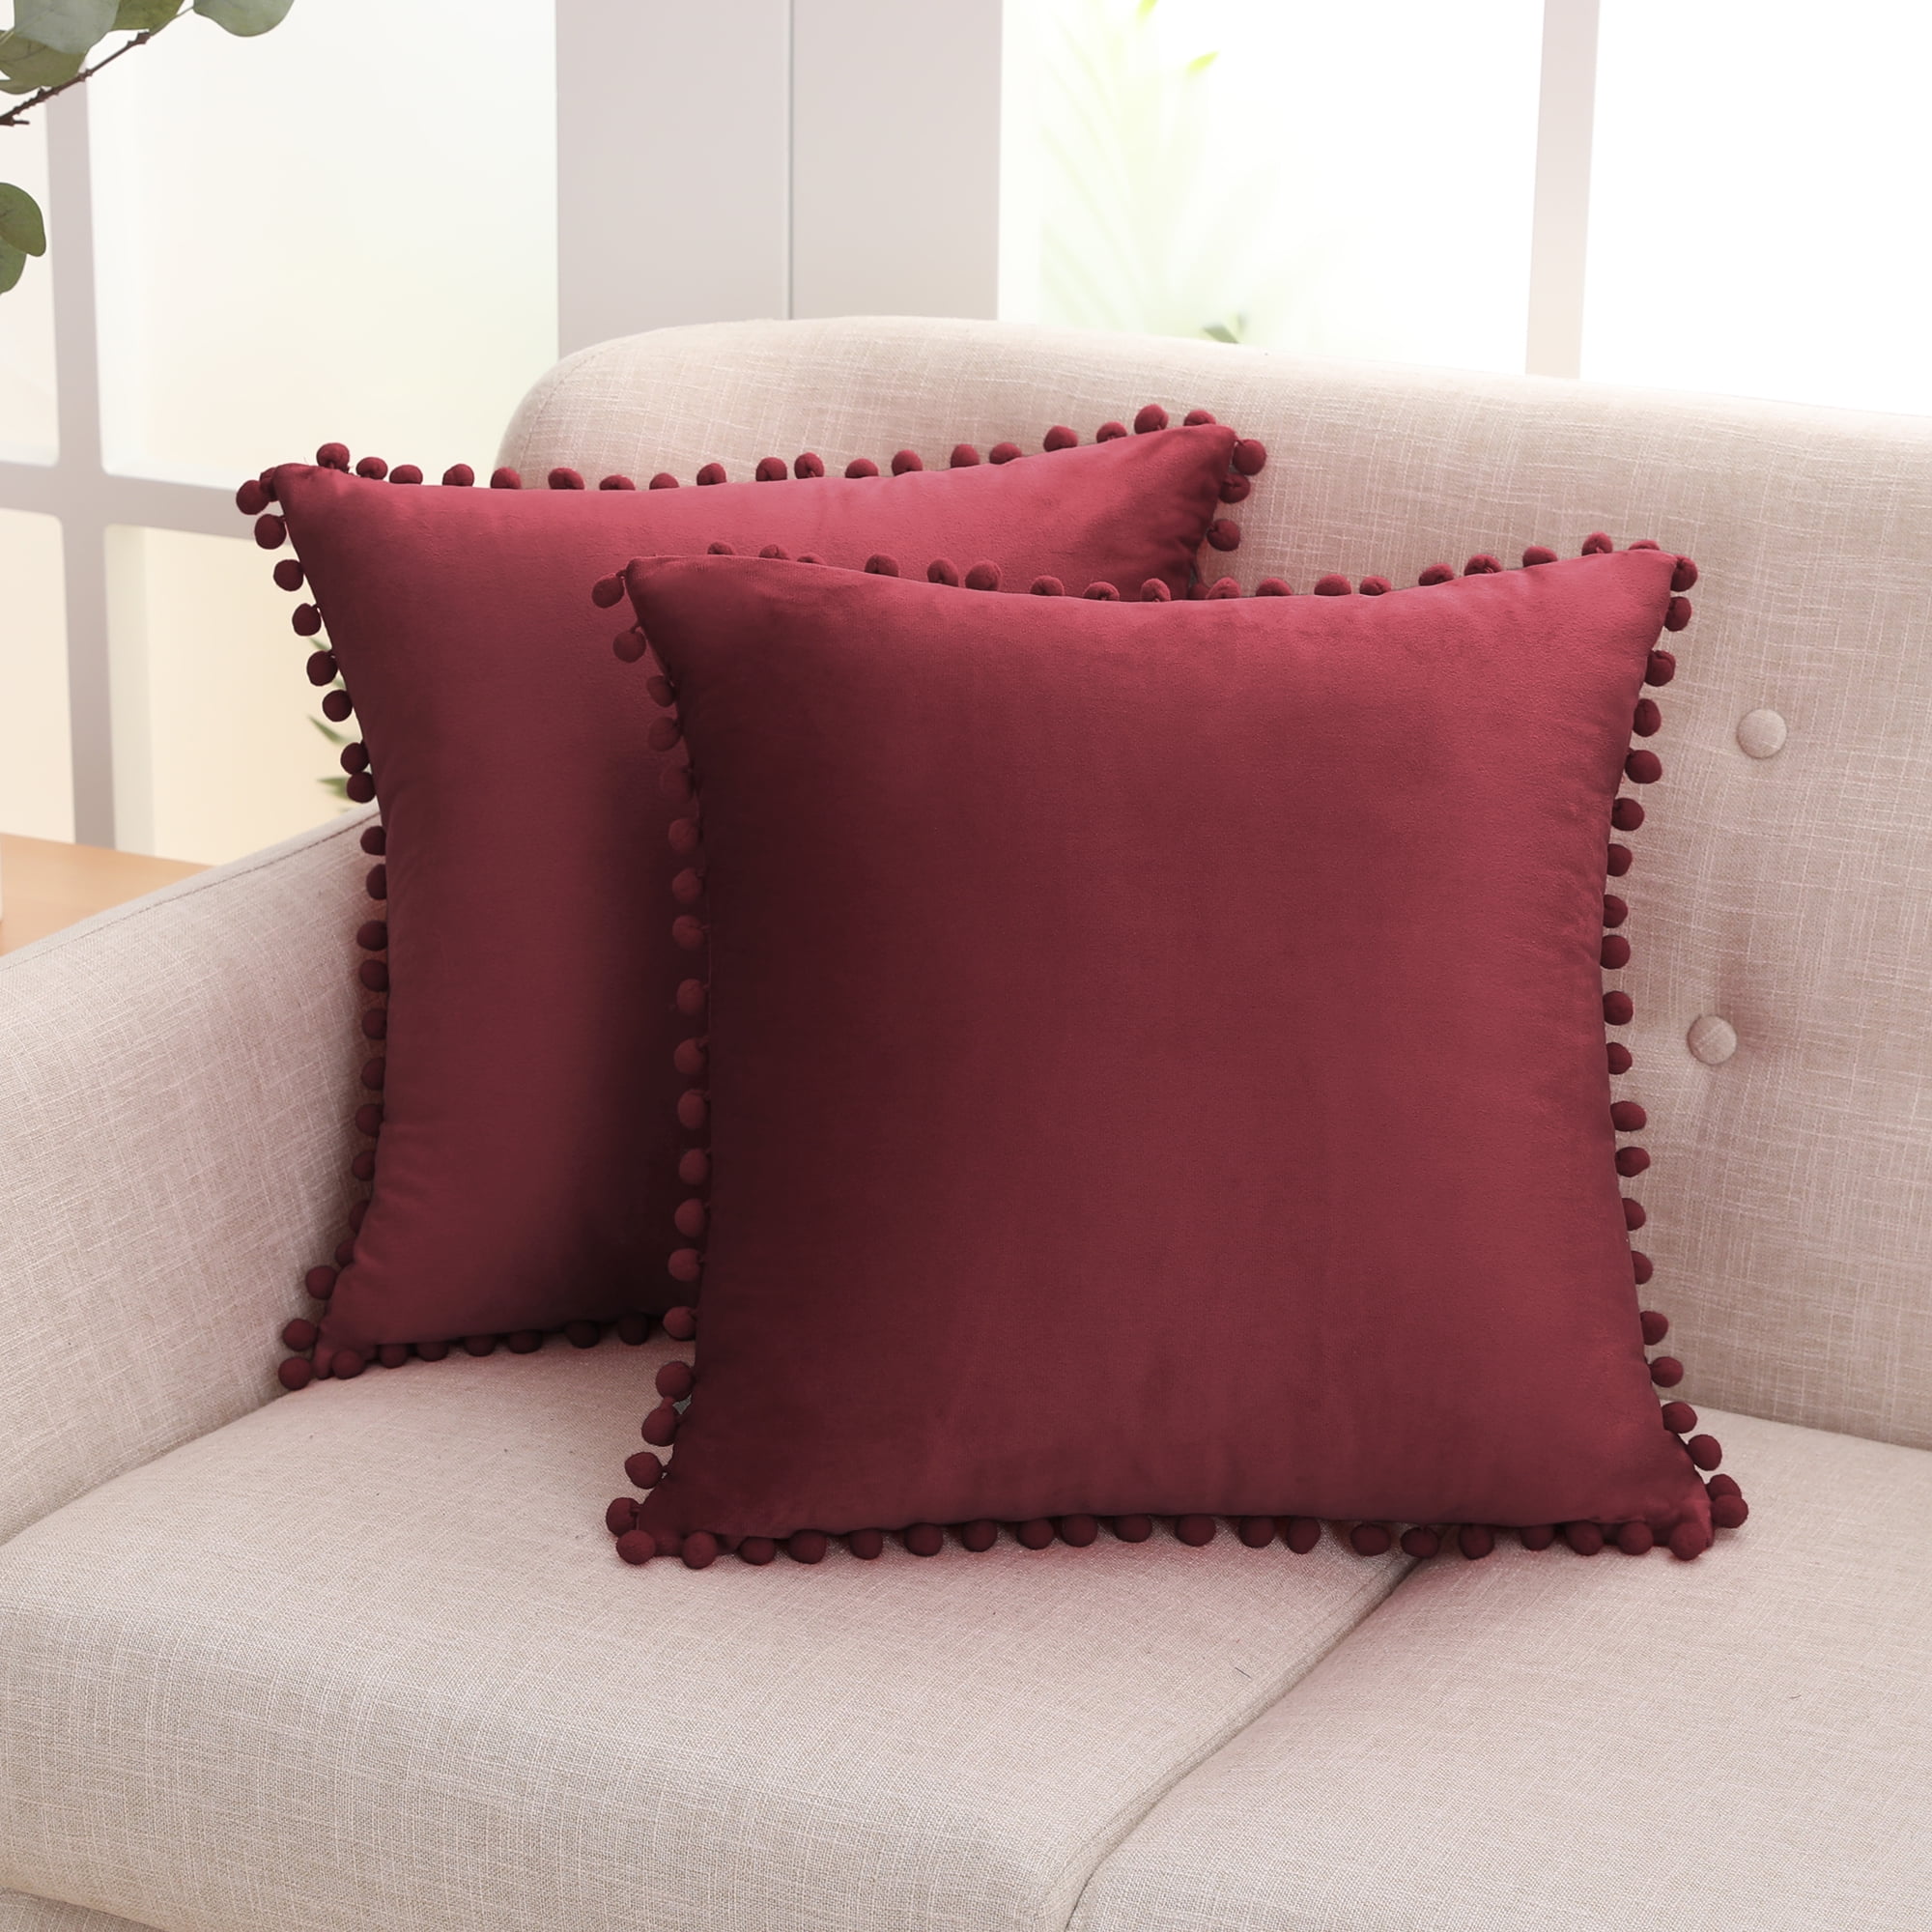 OTOSTAR Velvet Soft Decorative Throw Pillow Covers 24 x 24 Inch